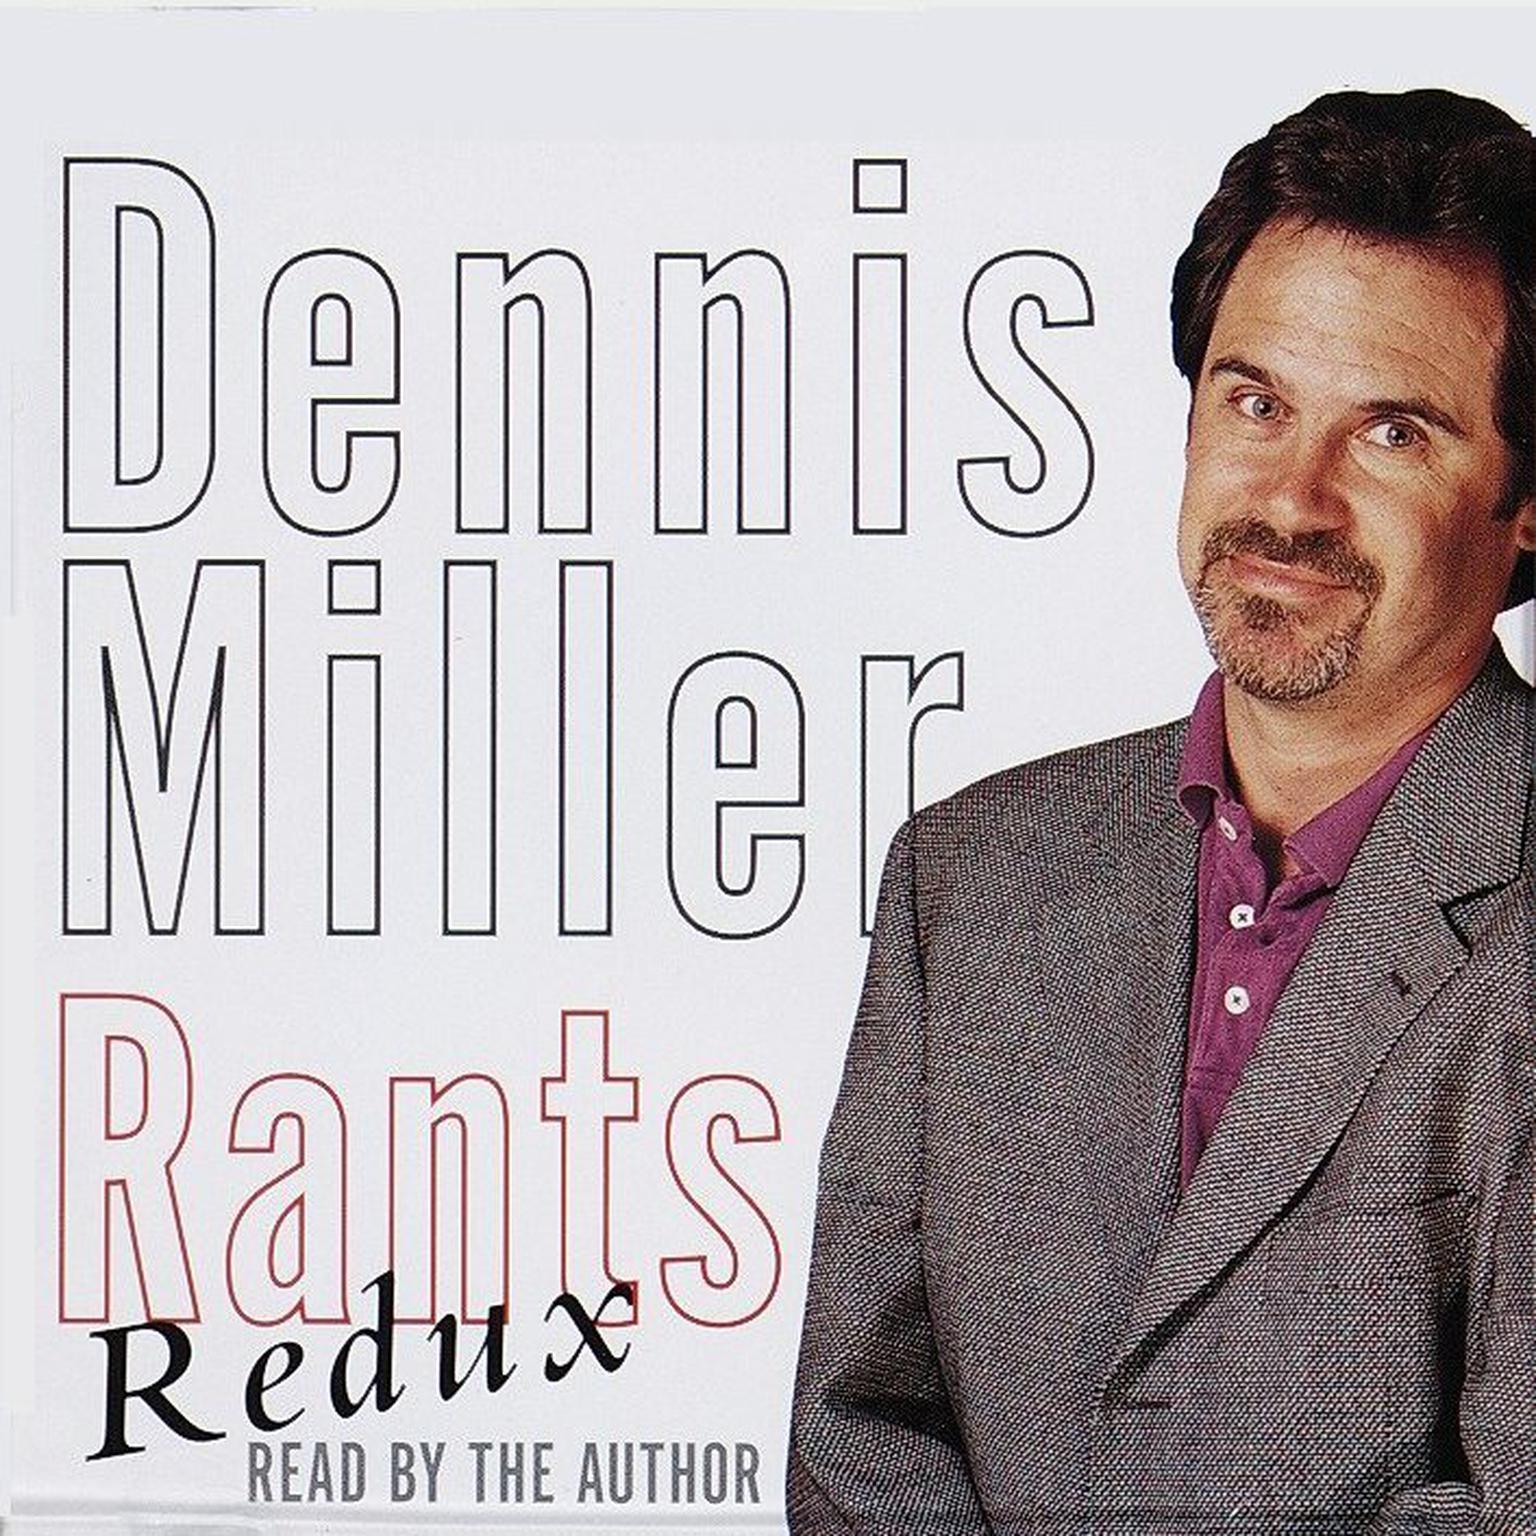 Rants Redux (Abridged) Audiobook, by Dennis Miller